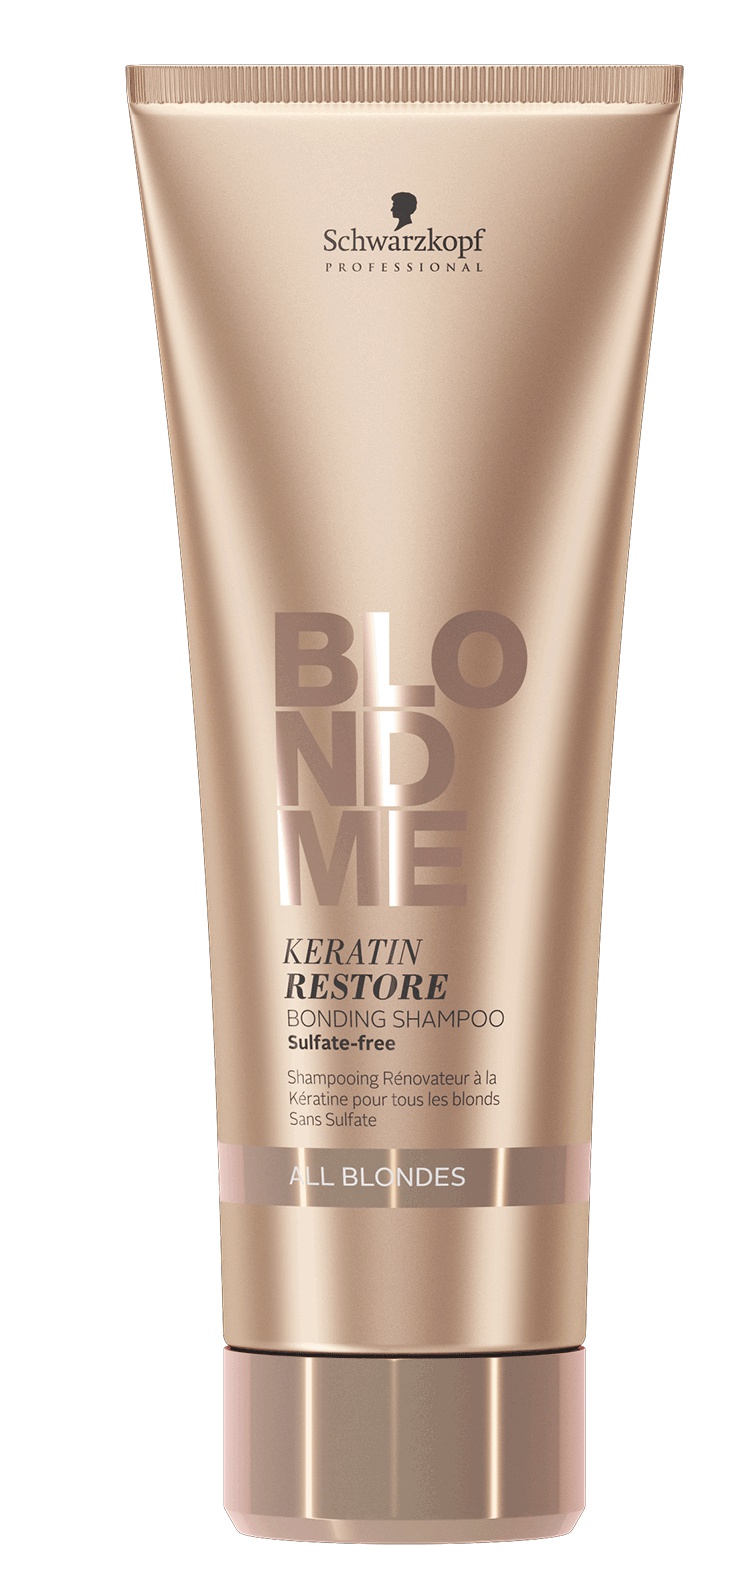 Schwarzkopf Professional BlondMe Keratin Restore Bonding Shampoo - All Blondes